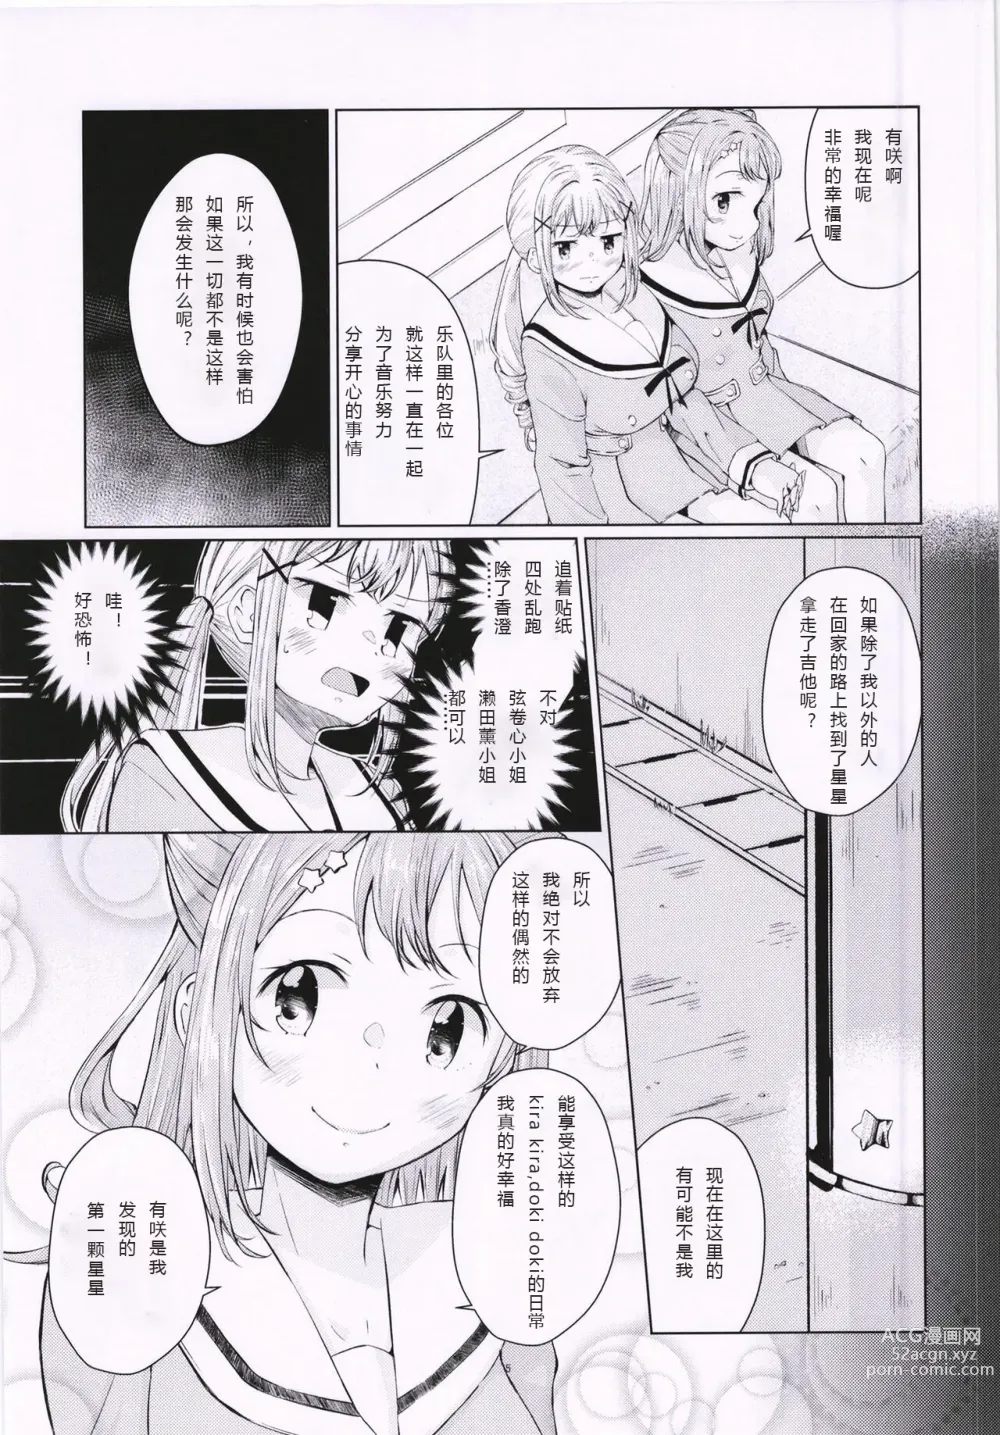 Page 6 of doujinshi 我见到的第一颗星